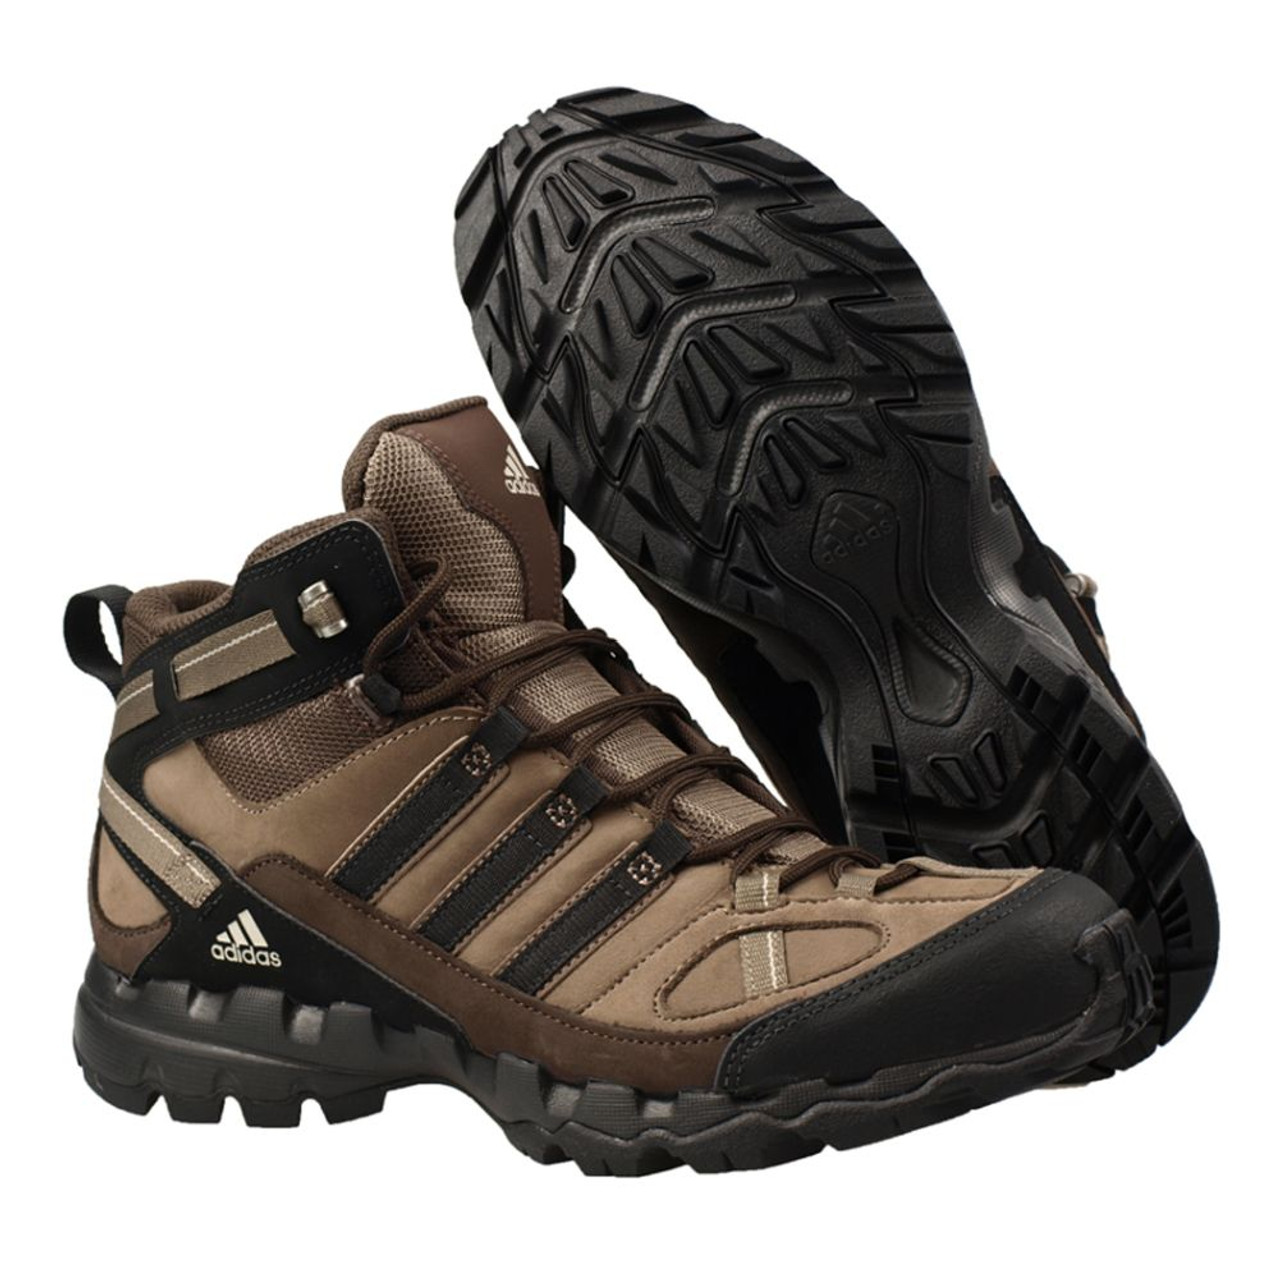 Adidas Ax 1 Mid Leather Brown/Black Hiking Boots - Grey Blend/Black/Collegi | Discount Adidas Men's Athletic Shoes & More - Shoolu.com | Shoolu.com